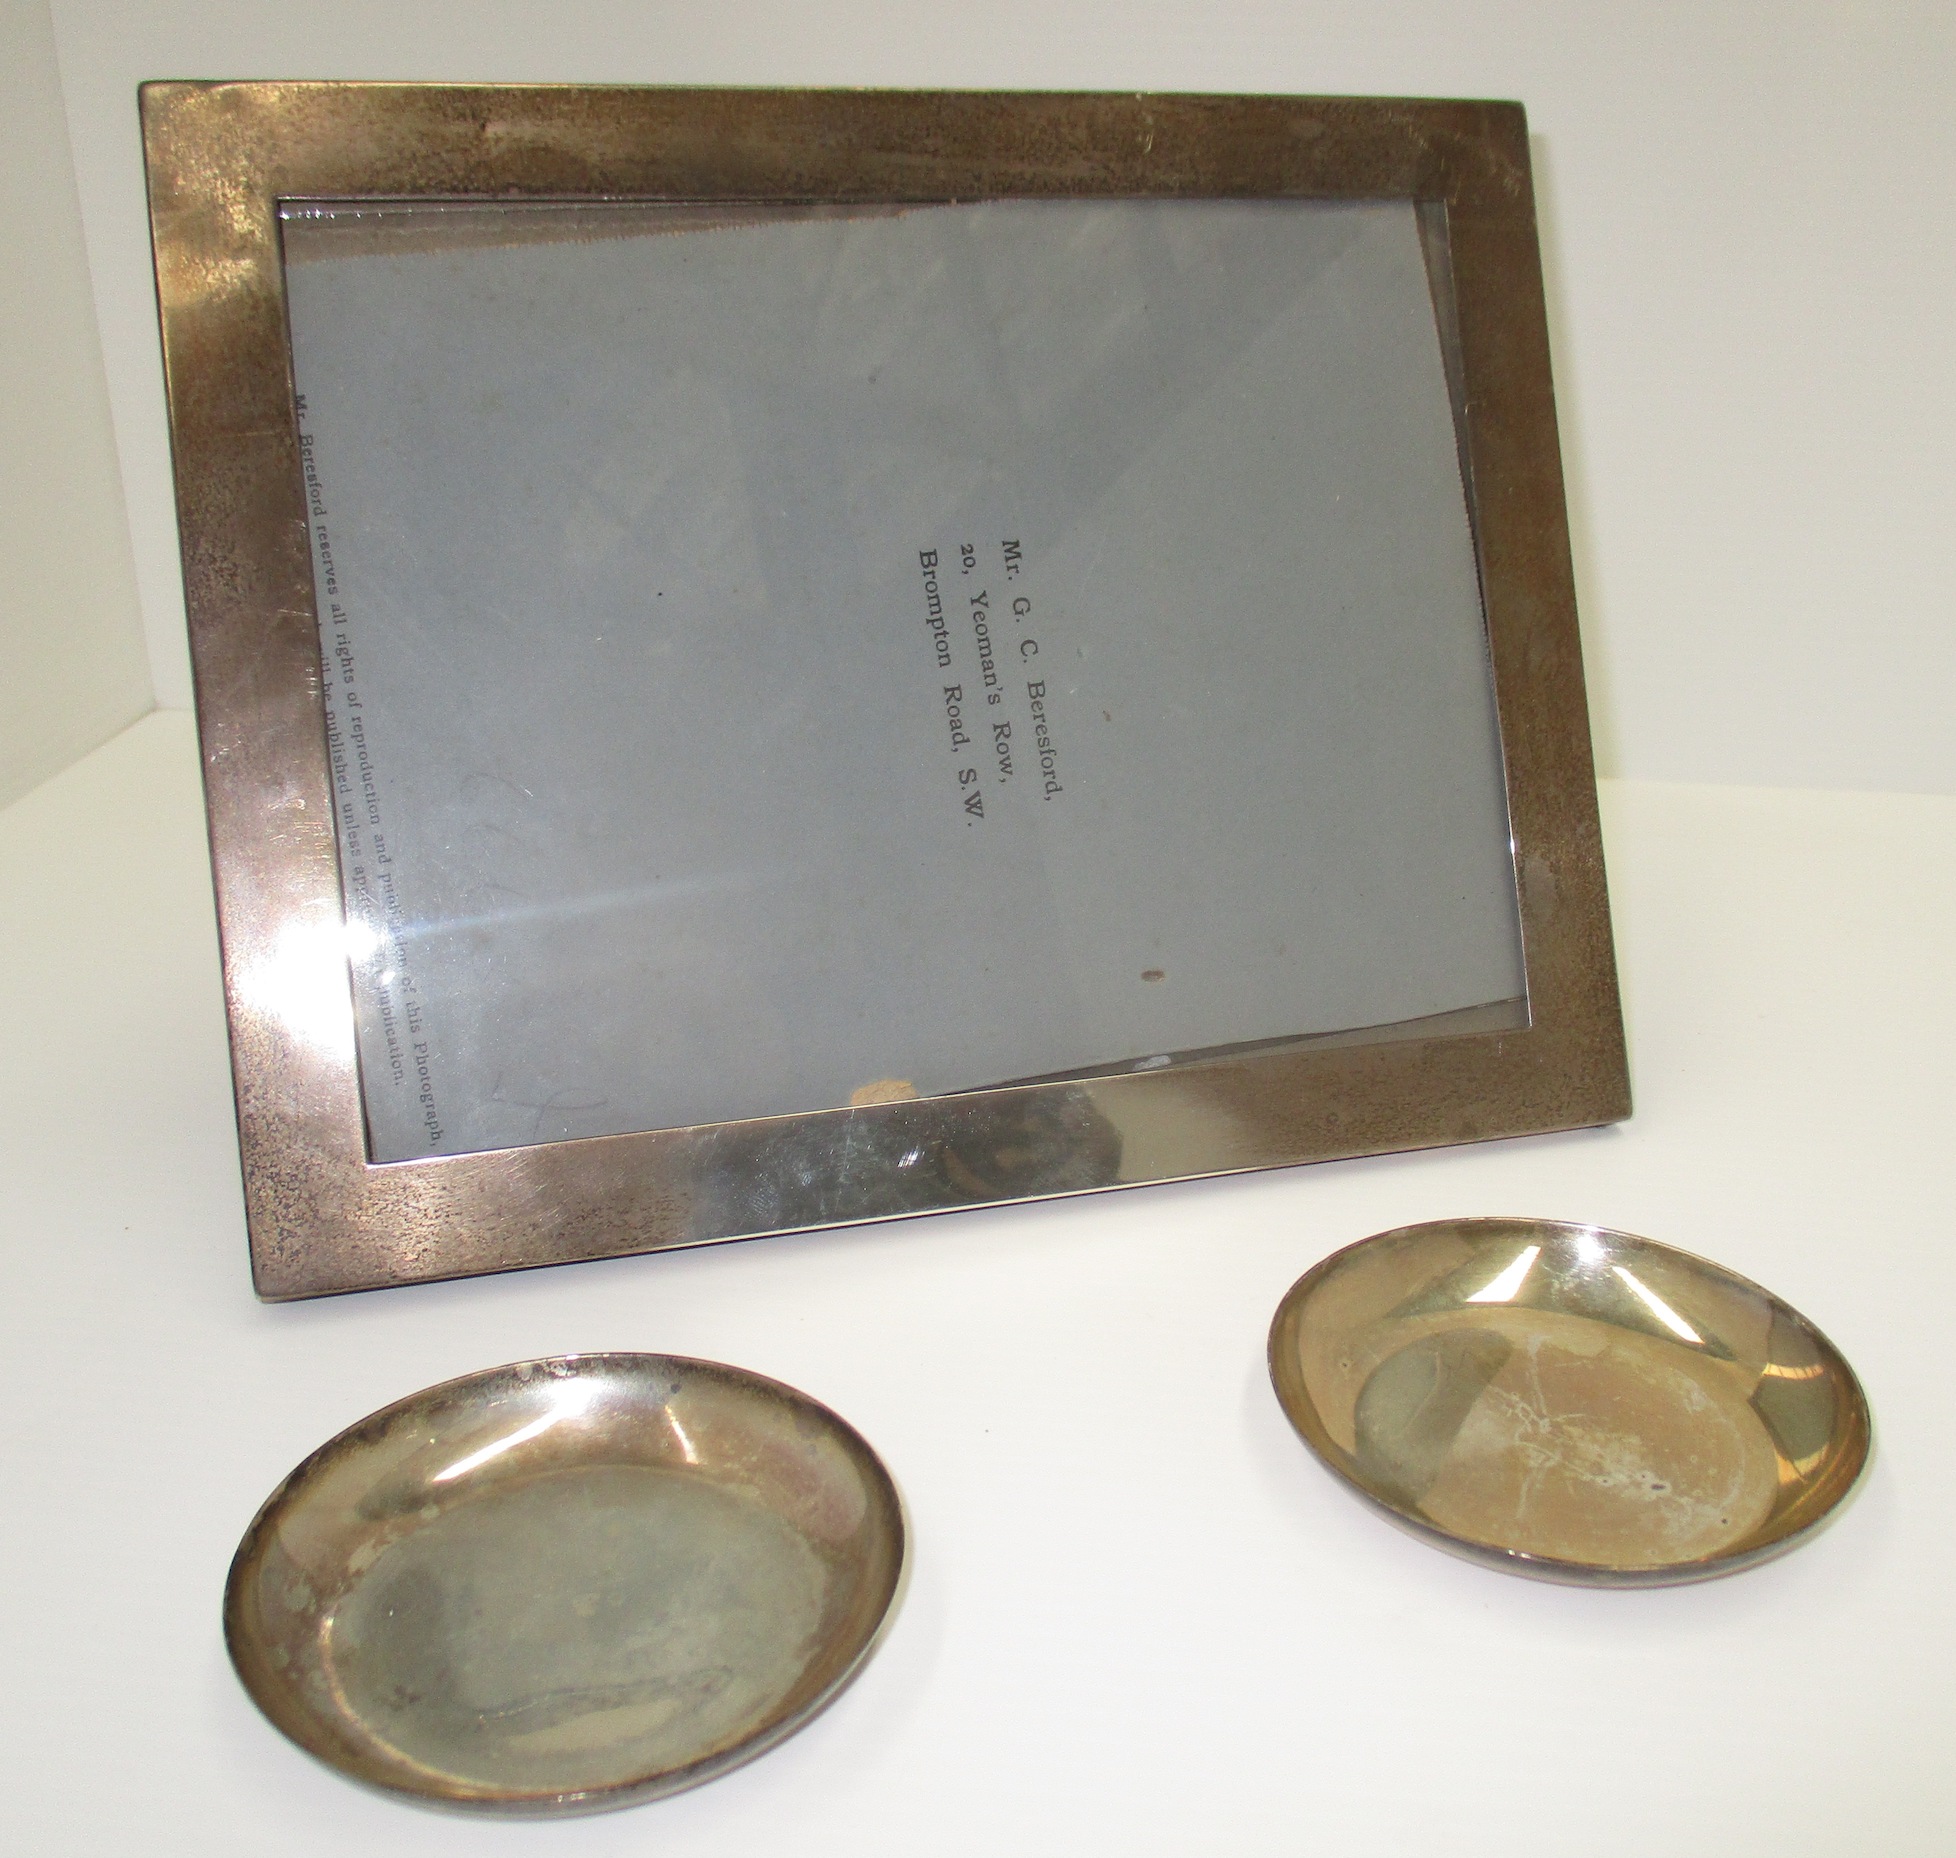 A plain rectangular silver photograph frame [aperture 20 cm x 15 cm] and a pair of silver coasters